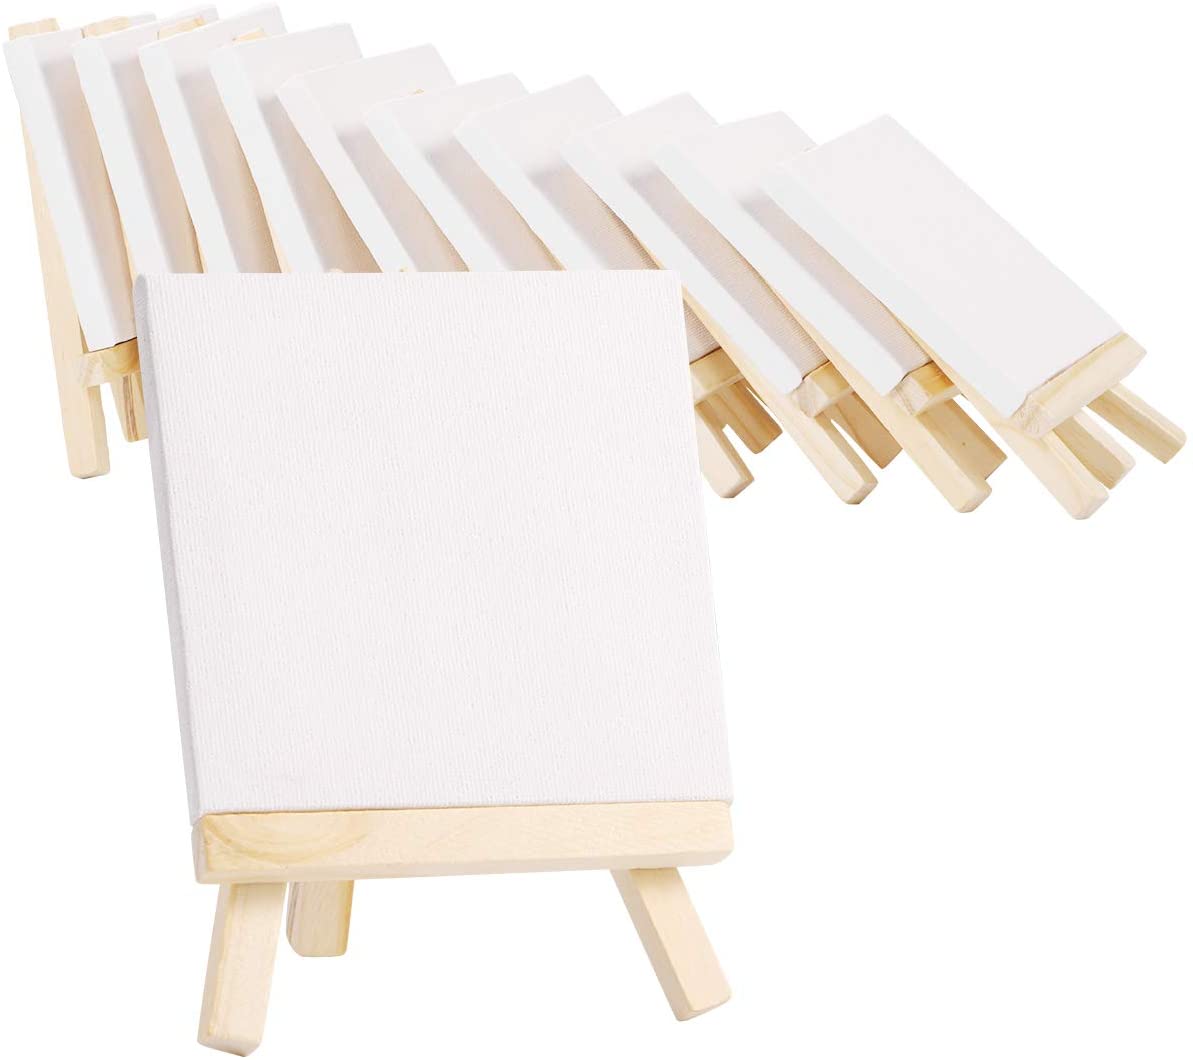 Caballetes de madera o tableros de pintura con lienzo blanco